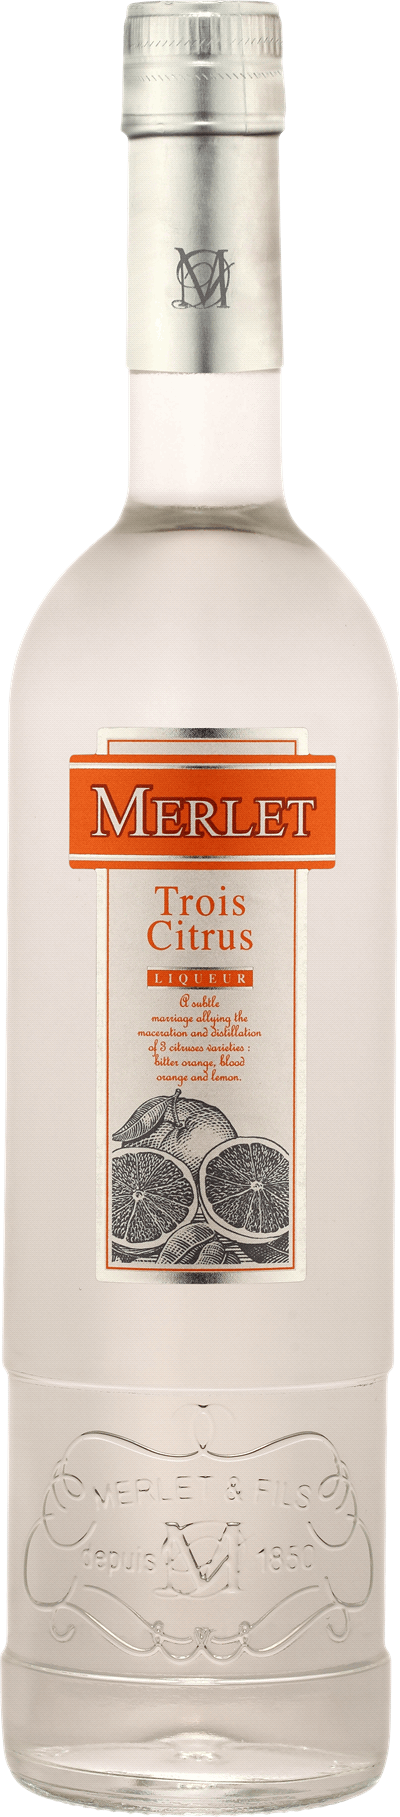 Merlet Trois Citrus